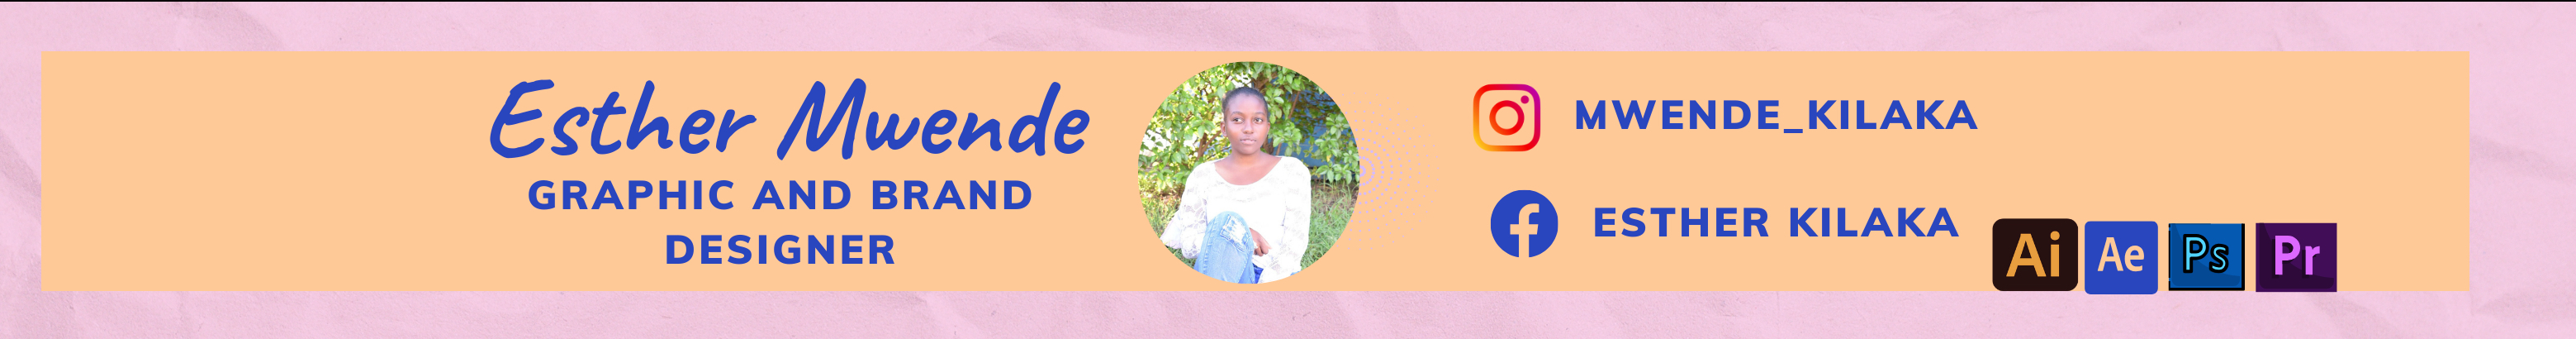 Esther Mwende's profile banner